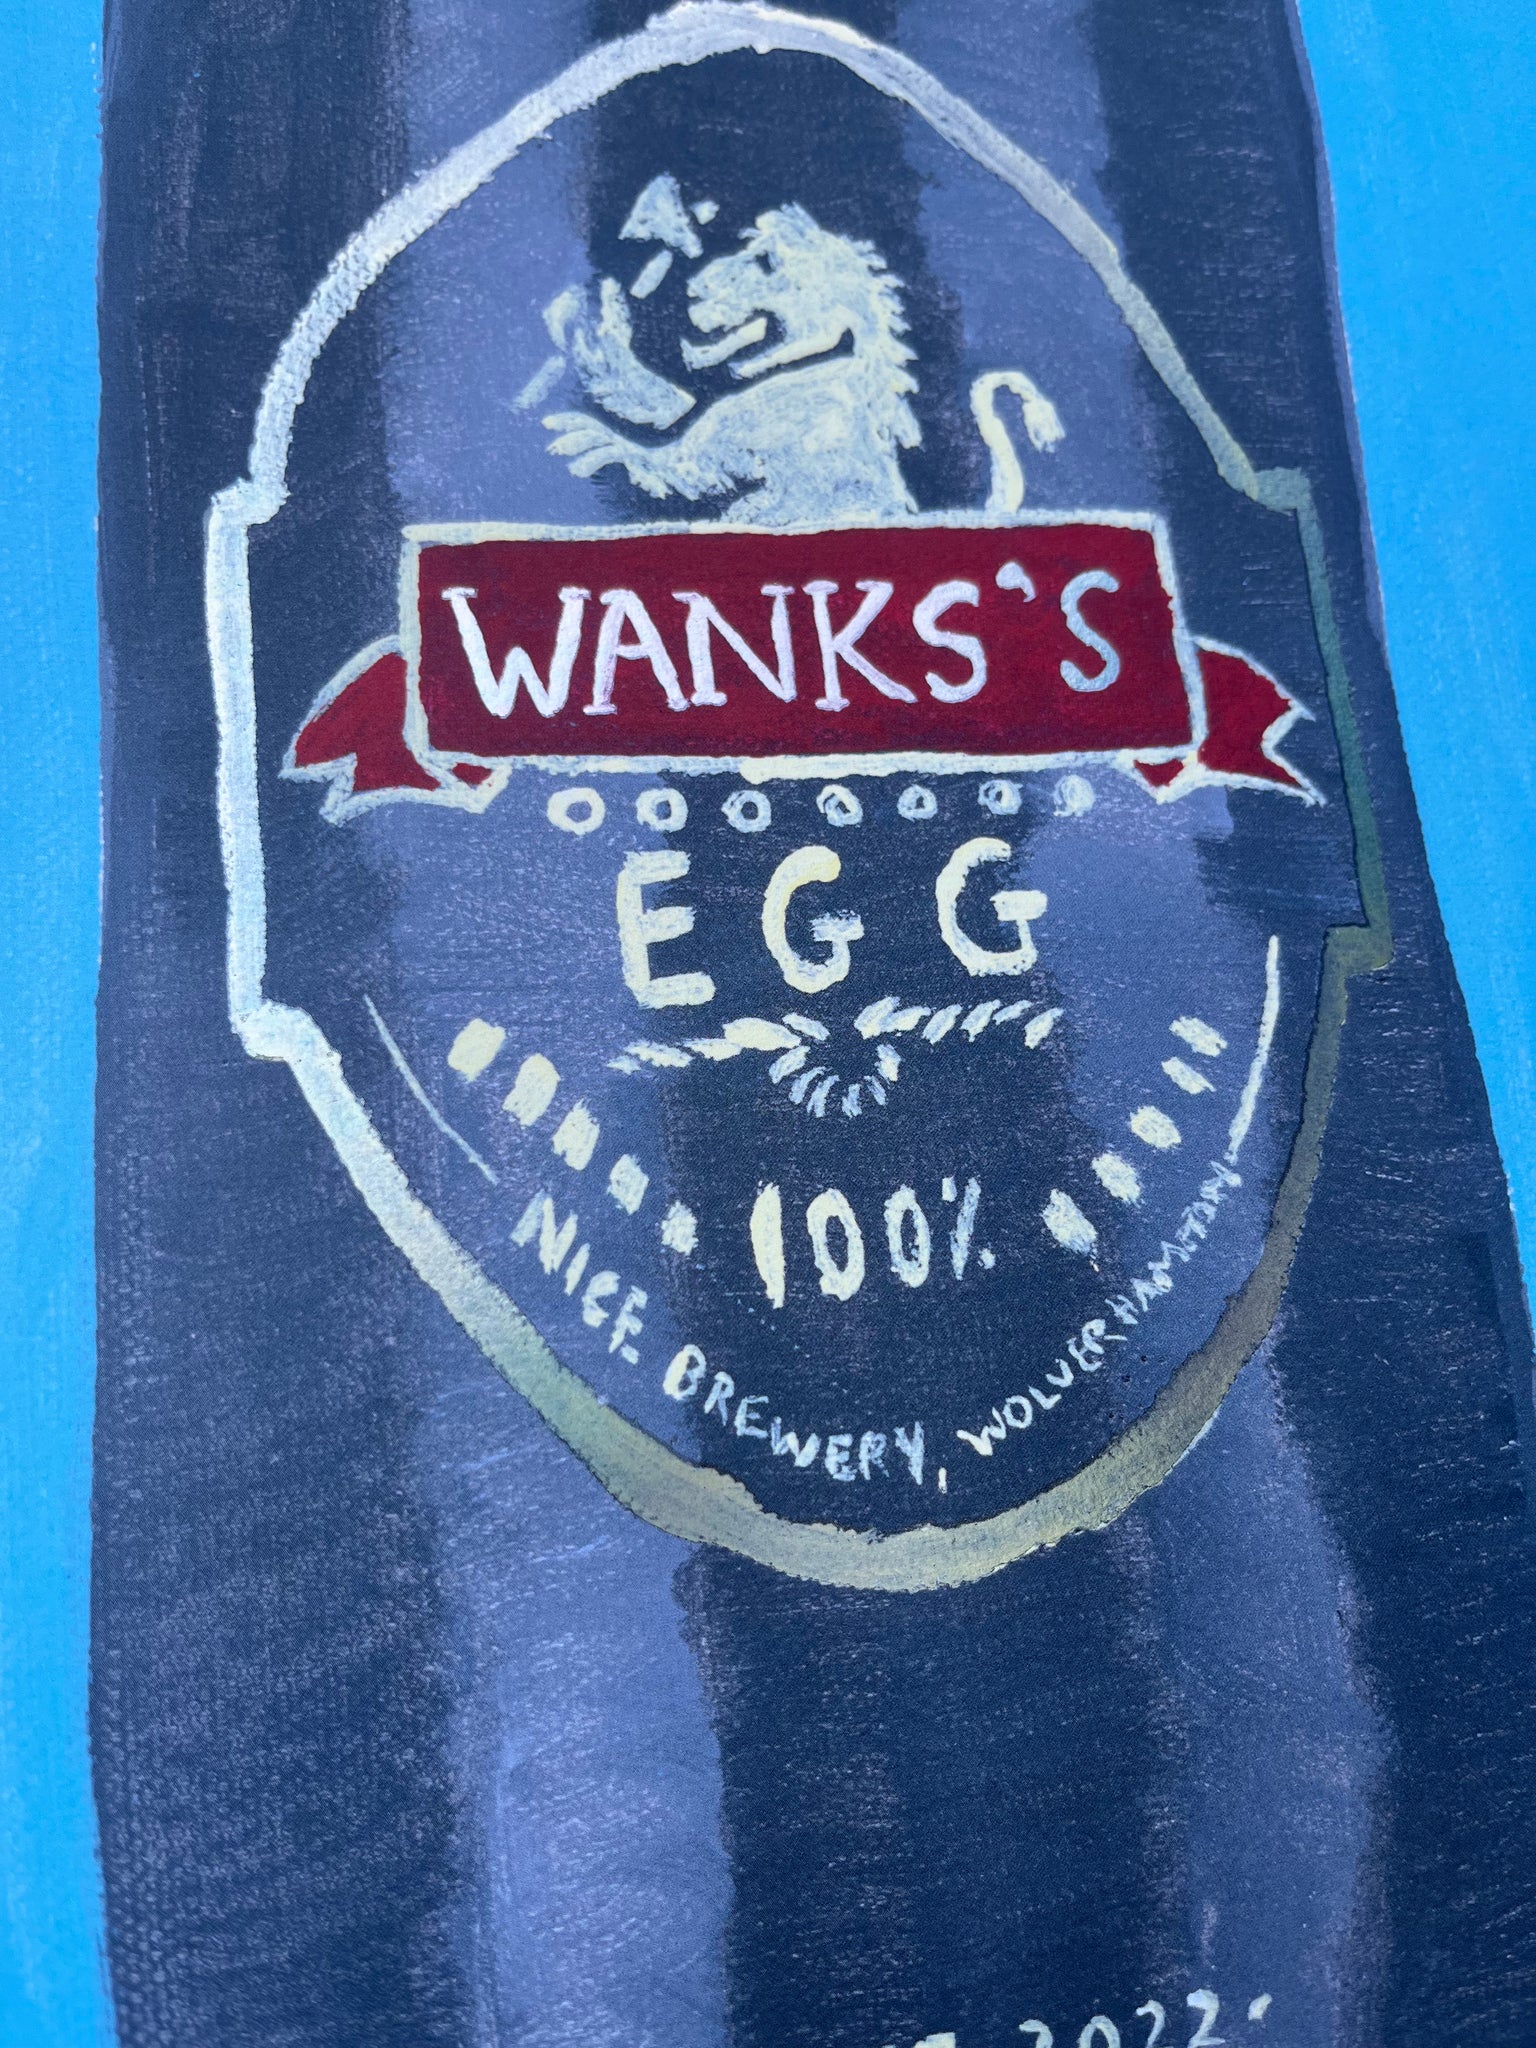 Wanks's